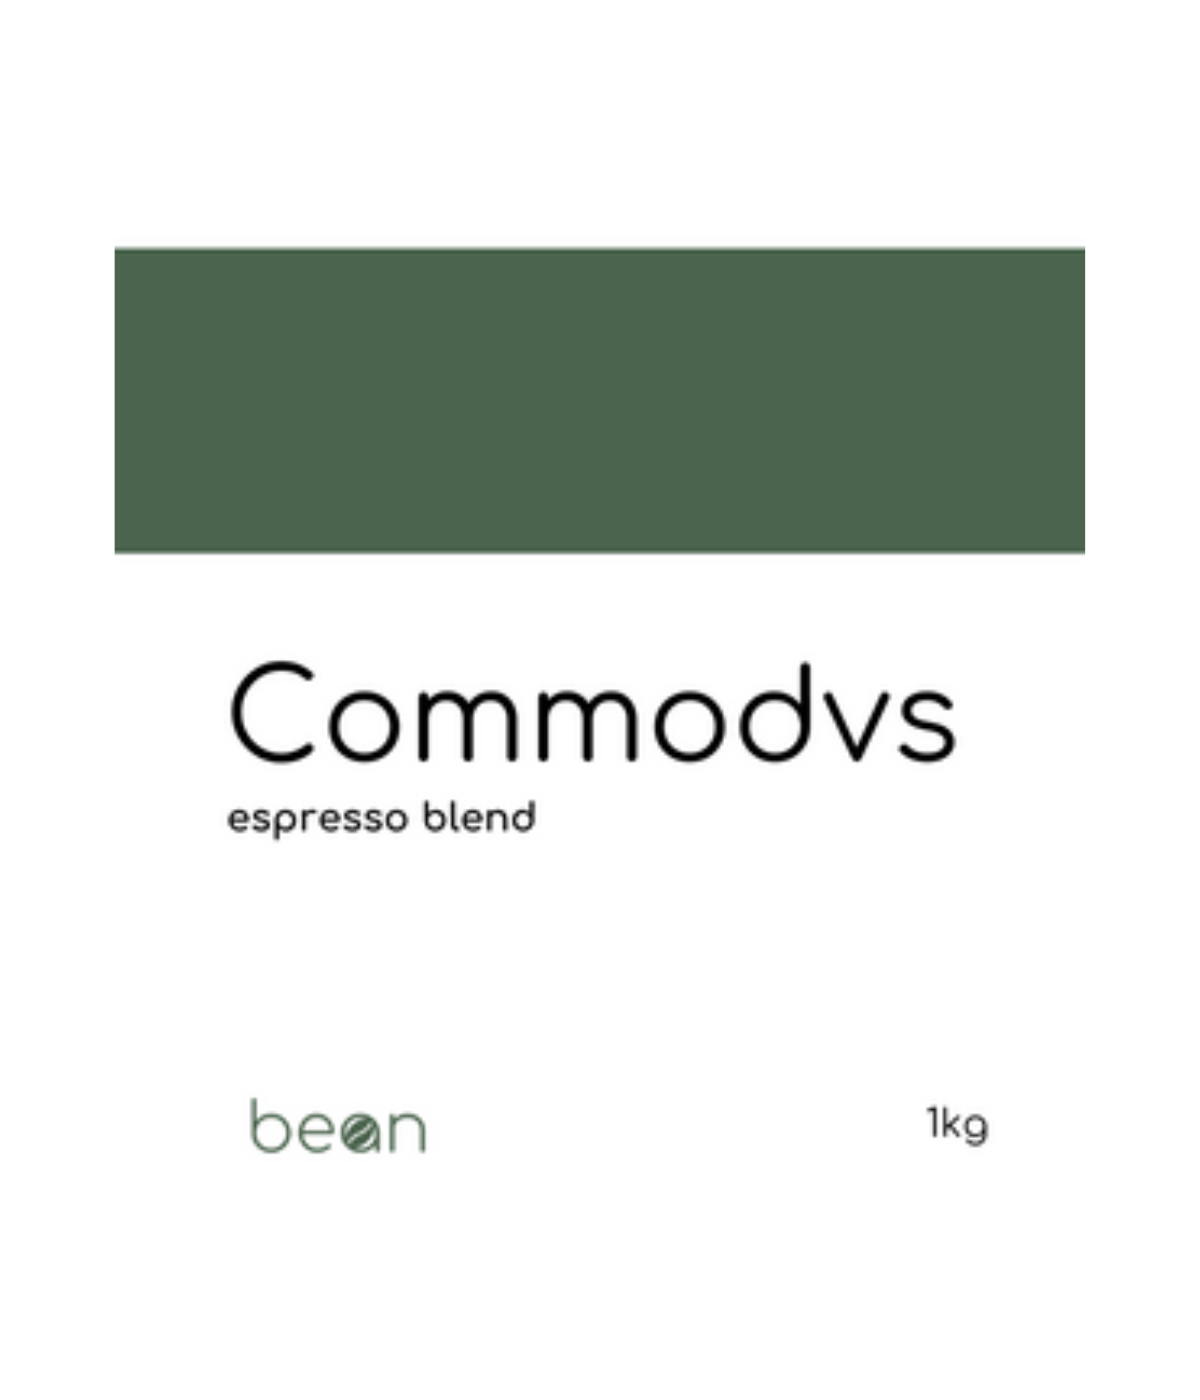 Bean Commodvs espresso blend 1kg